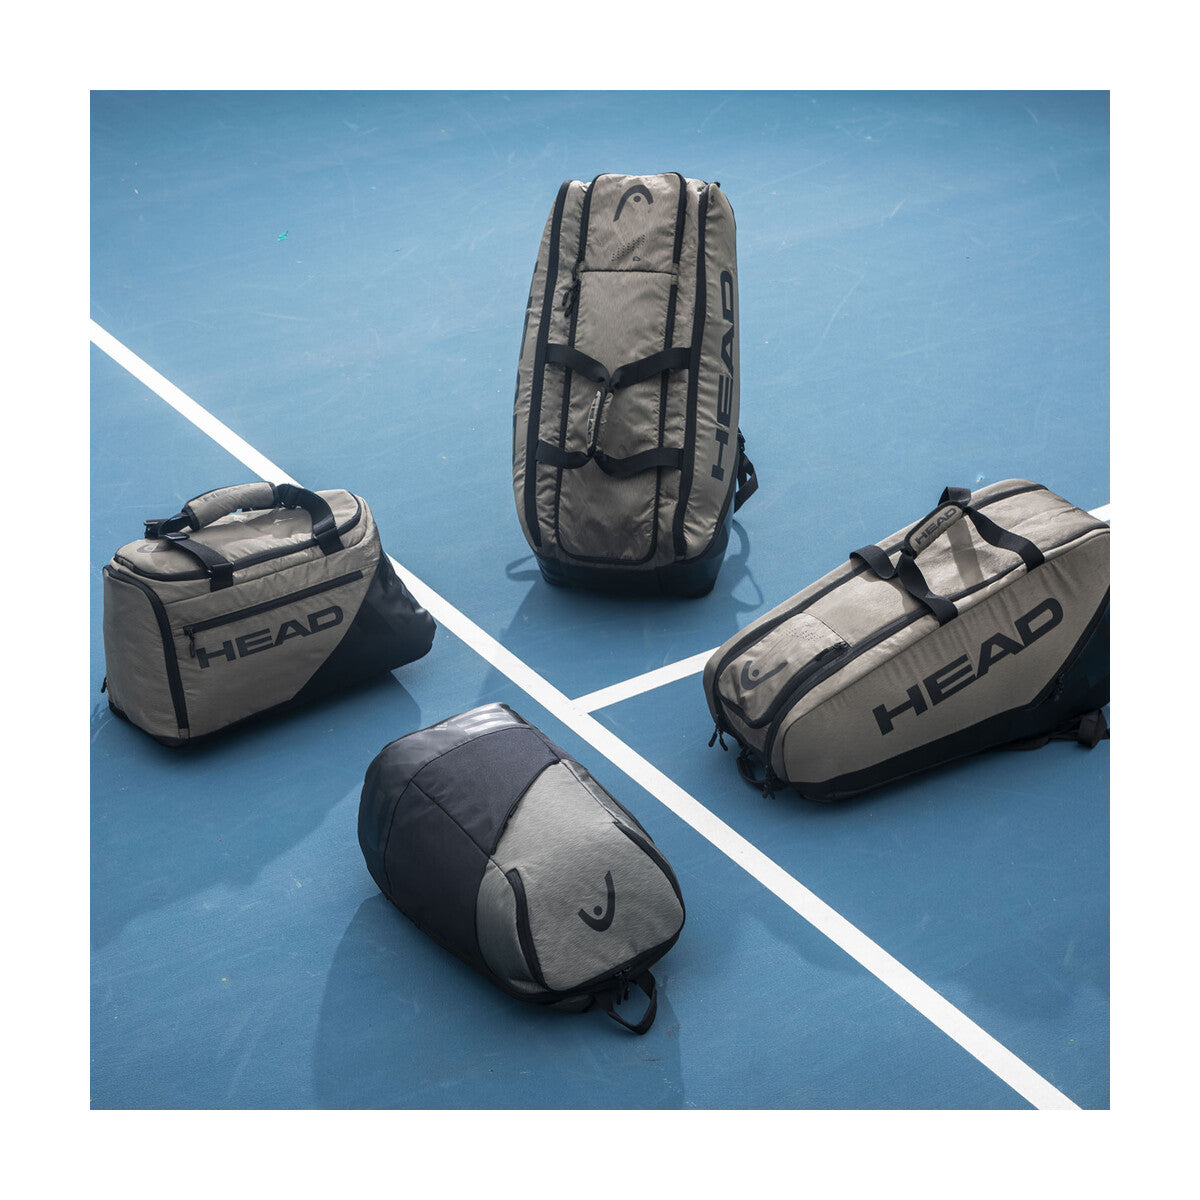 Head Pro X racquet tennis bag L